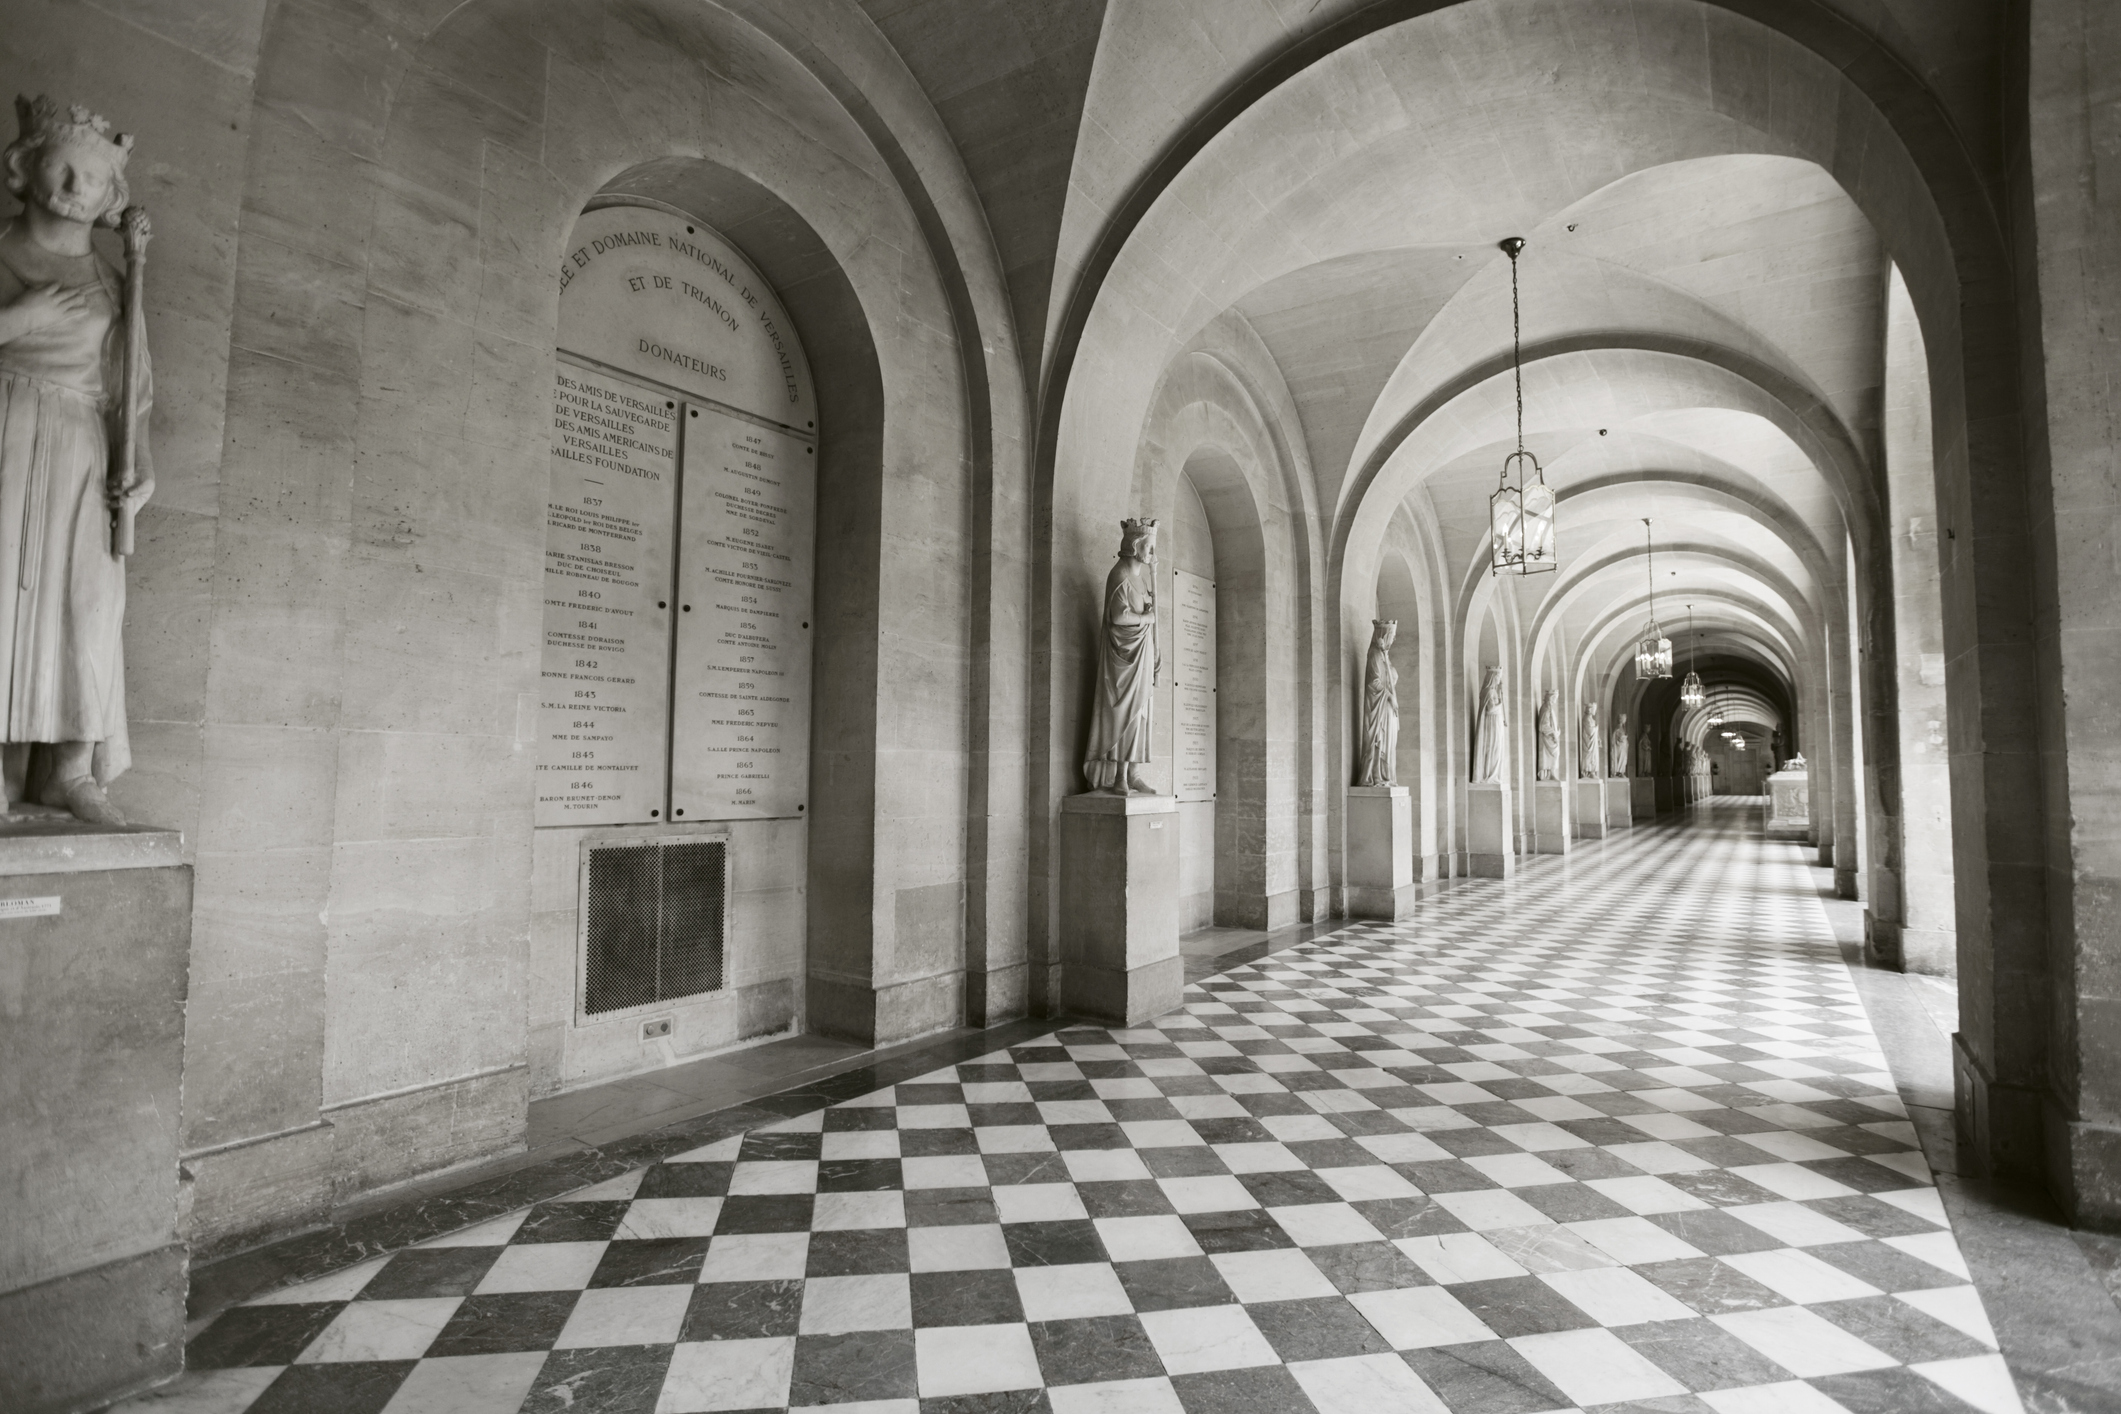 Hallway at the Palace (photo: IvanMikhaylov)